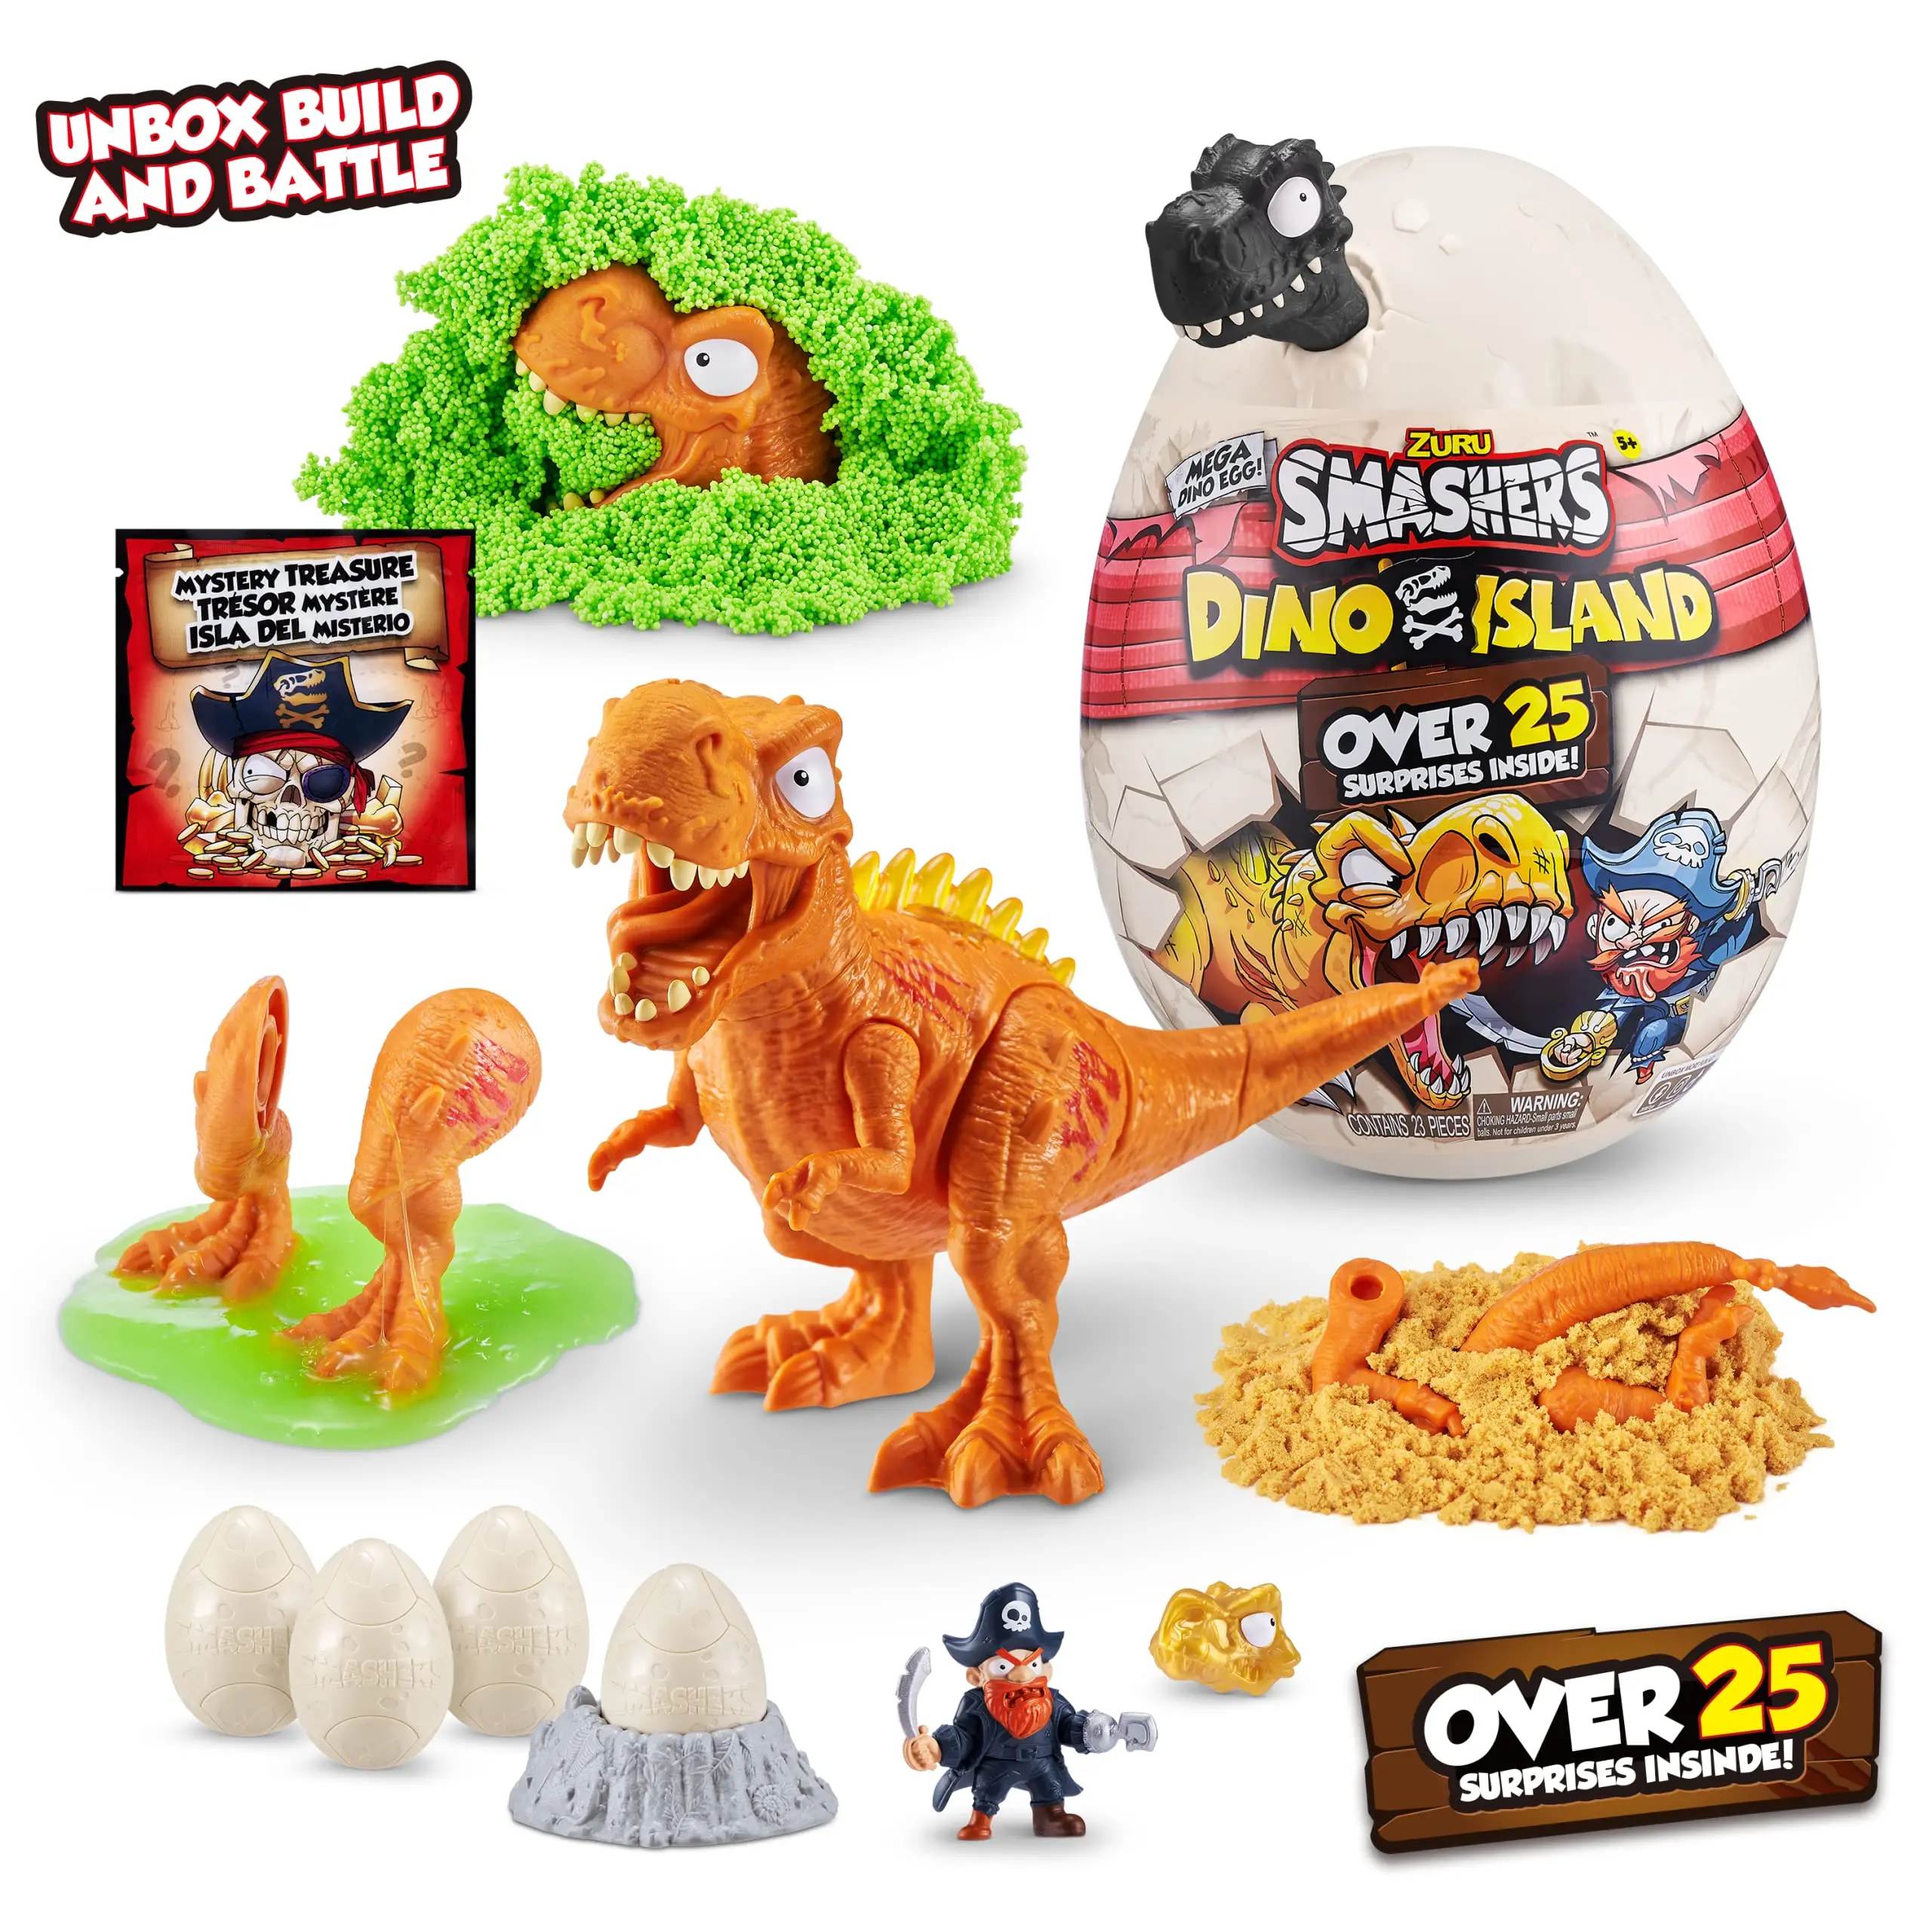 

Original Zuru Smashers Dino Island Slime Dinosaur Toys Mega Egg T-Rex Prehistoric Discovery Toy with 25 Dino-Island Surprises